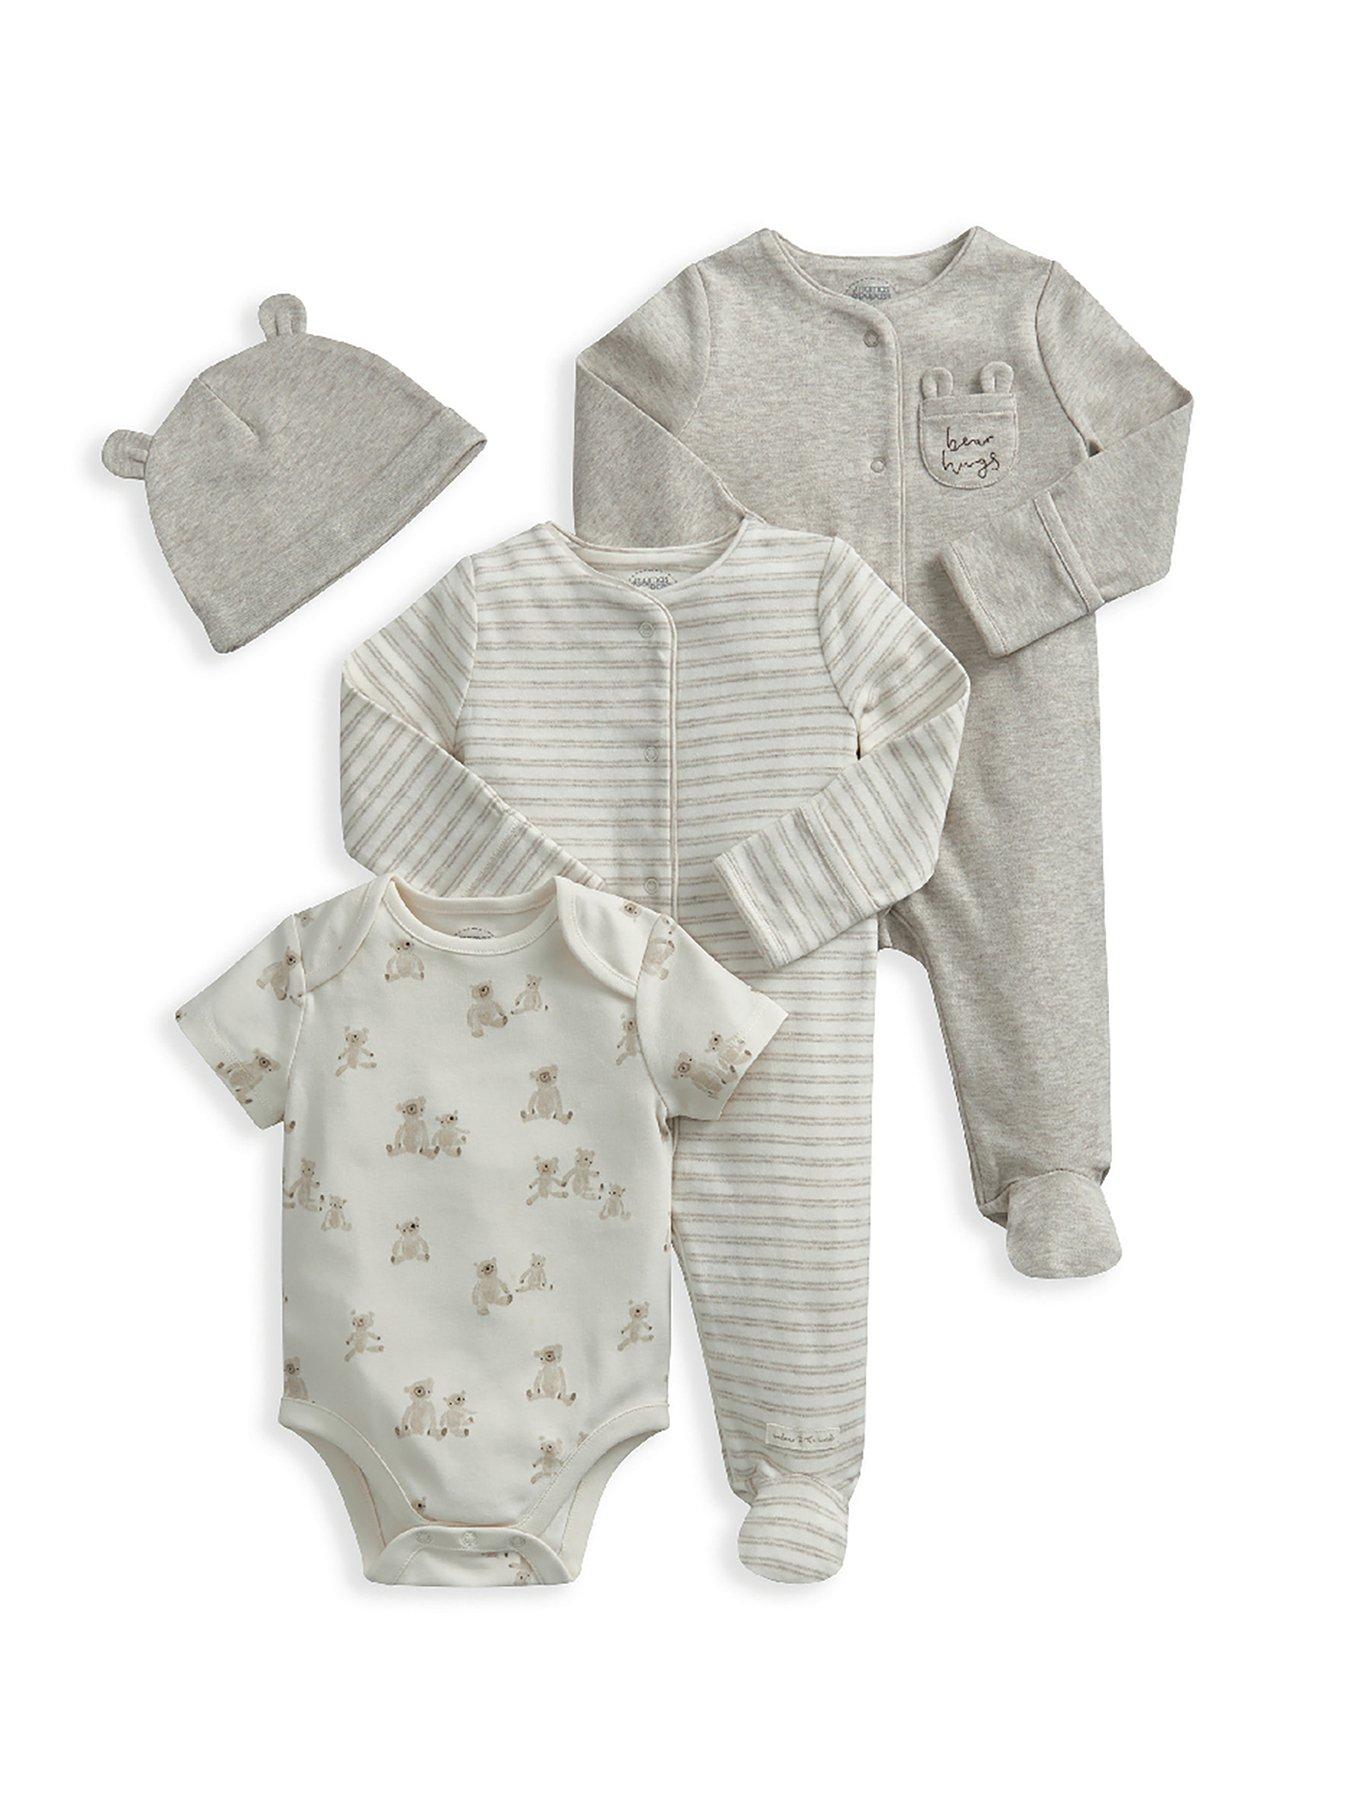 Newborn Clothes, Newborn Baby Outfits